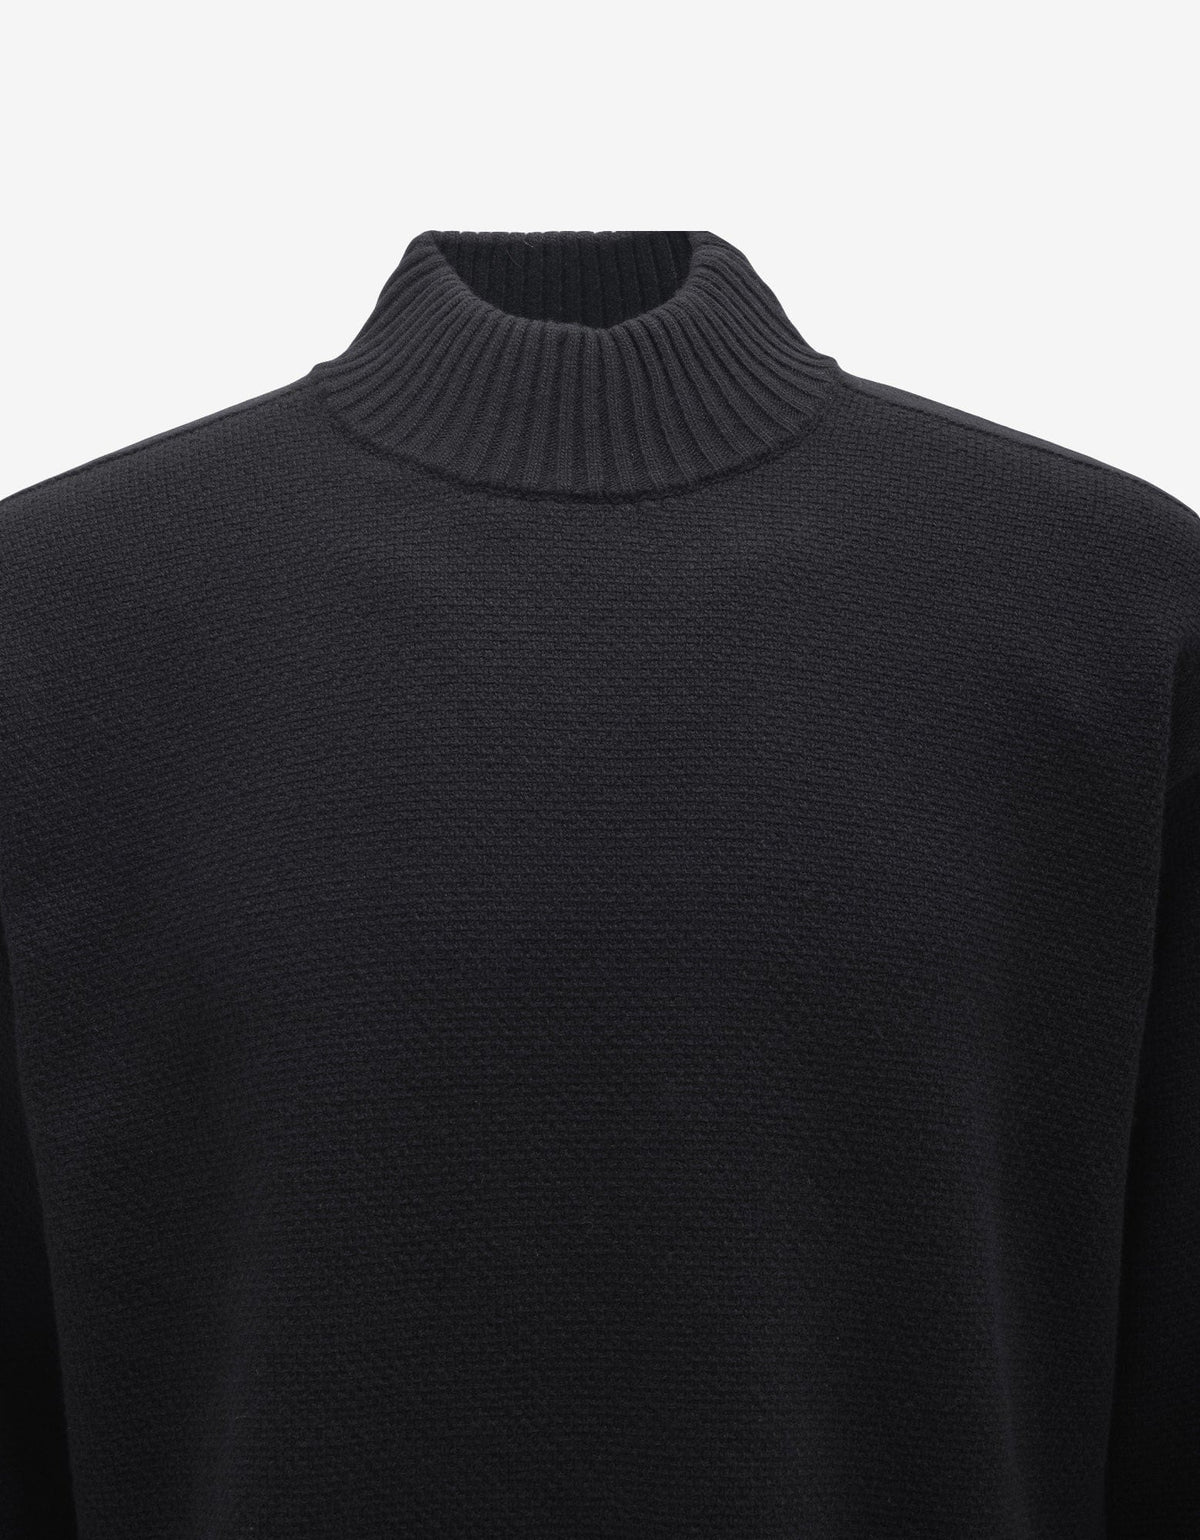 Stone Island Shadow Project Black Roll-neck Sweater